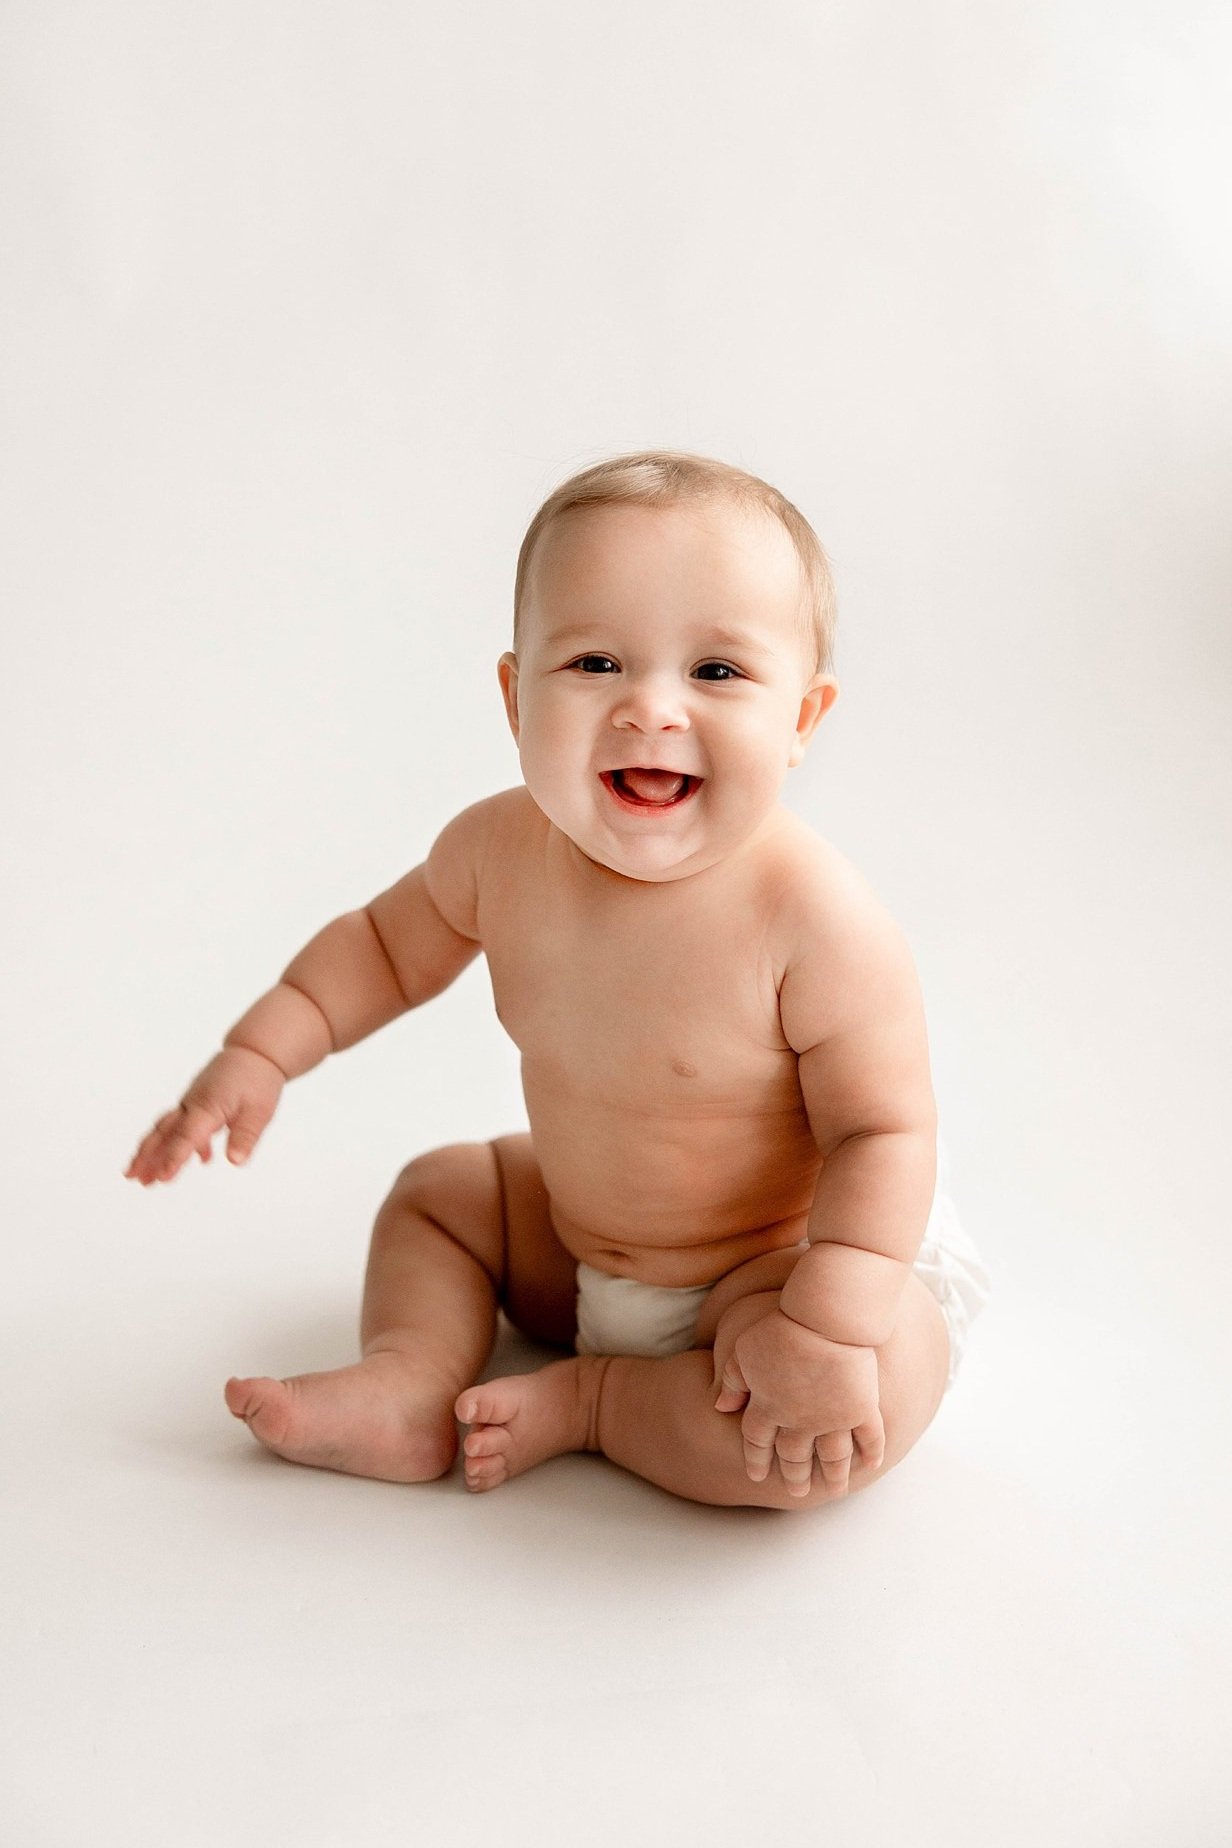 6-8 month old baby photo shoot detroit mi